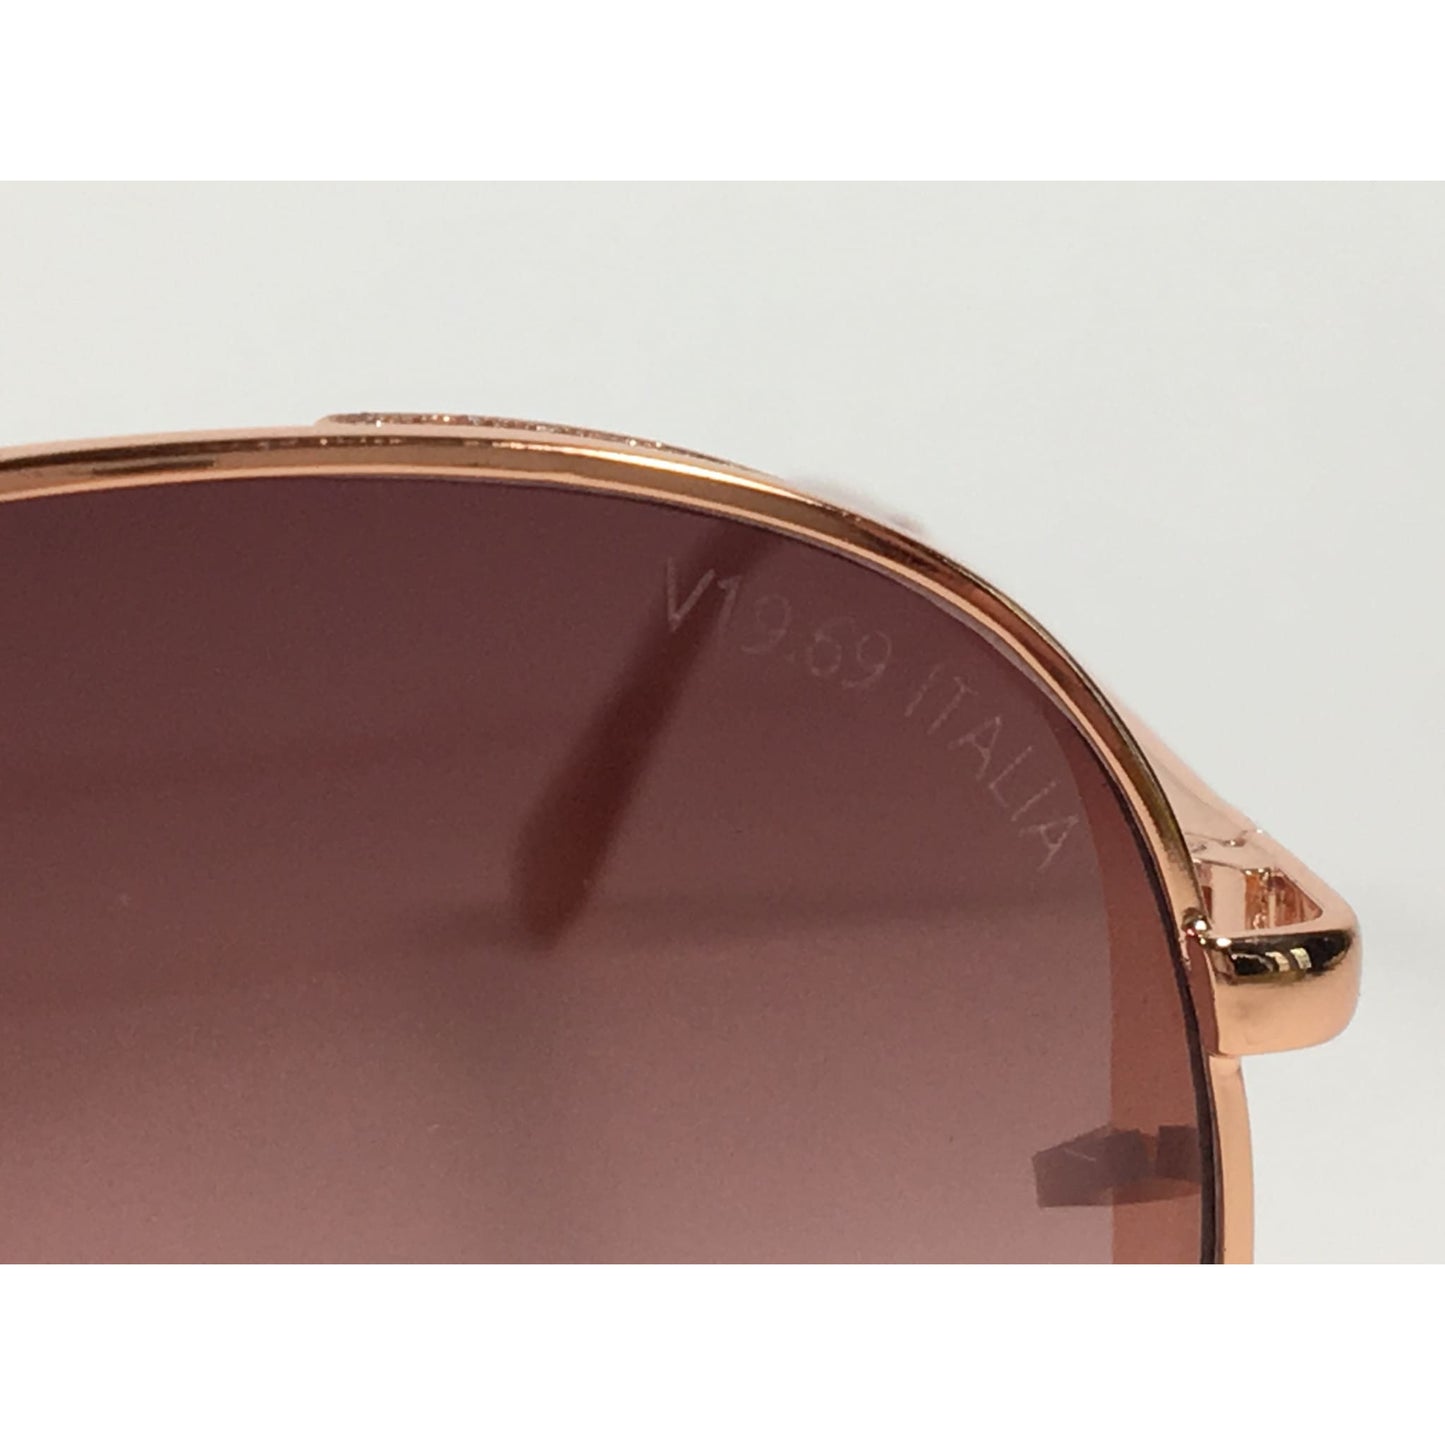 Versace 19V69 Italia Mona Aviator Pilot Sunglasses Rose Gold Metal Brown Rose Gradient Lens - Sunglasses